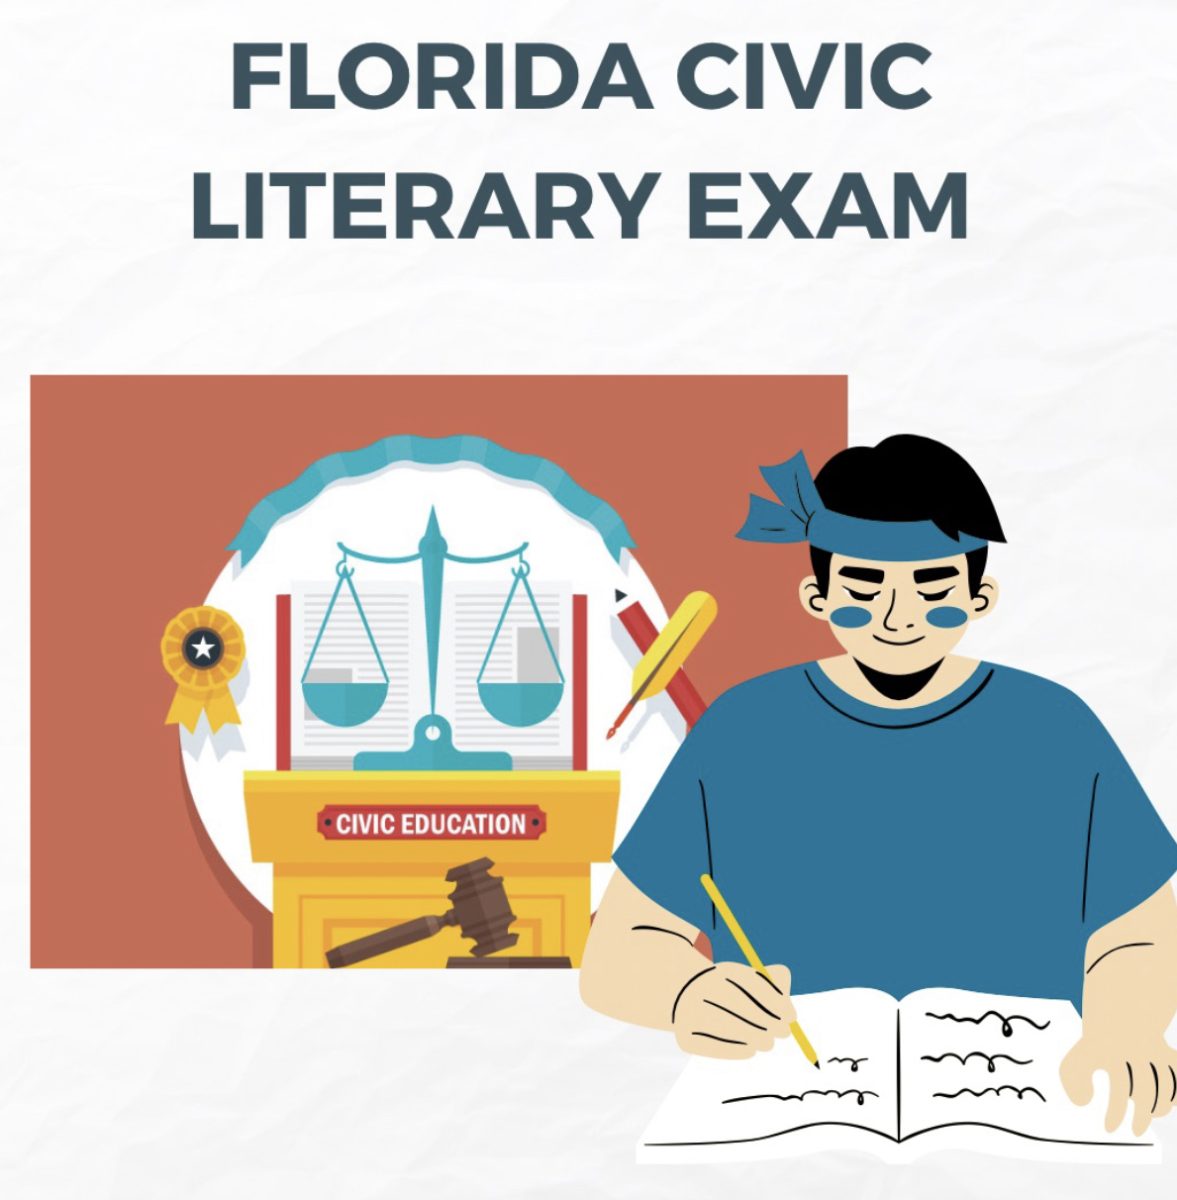 THE FCLE (FLORIDA CIVIC LITERACY EXAM)